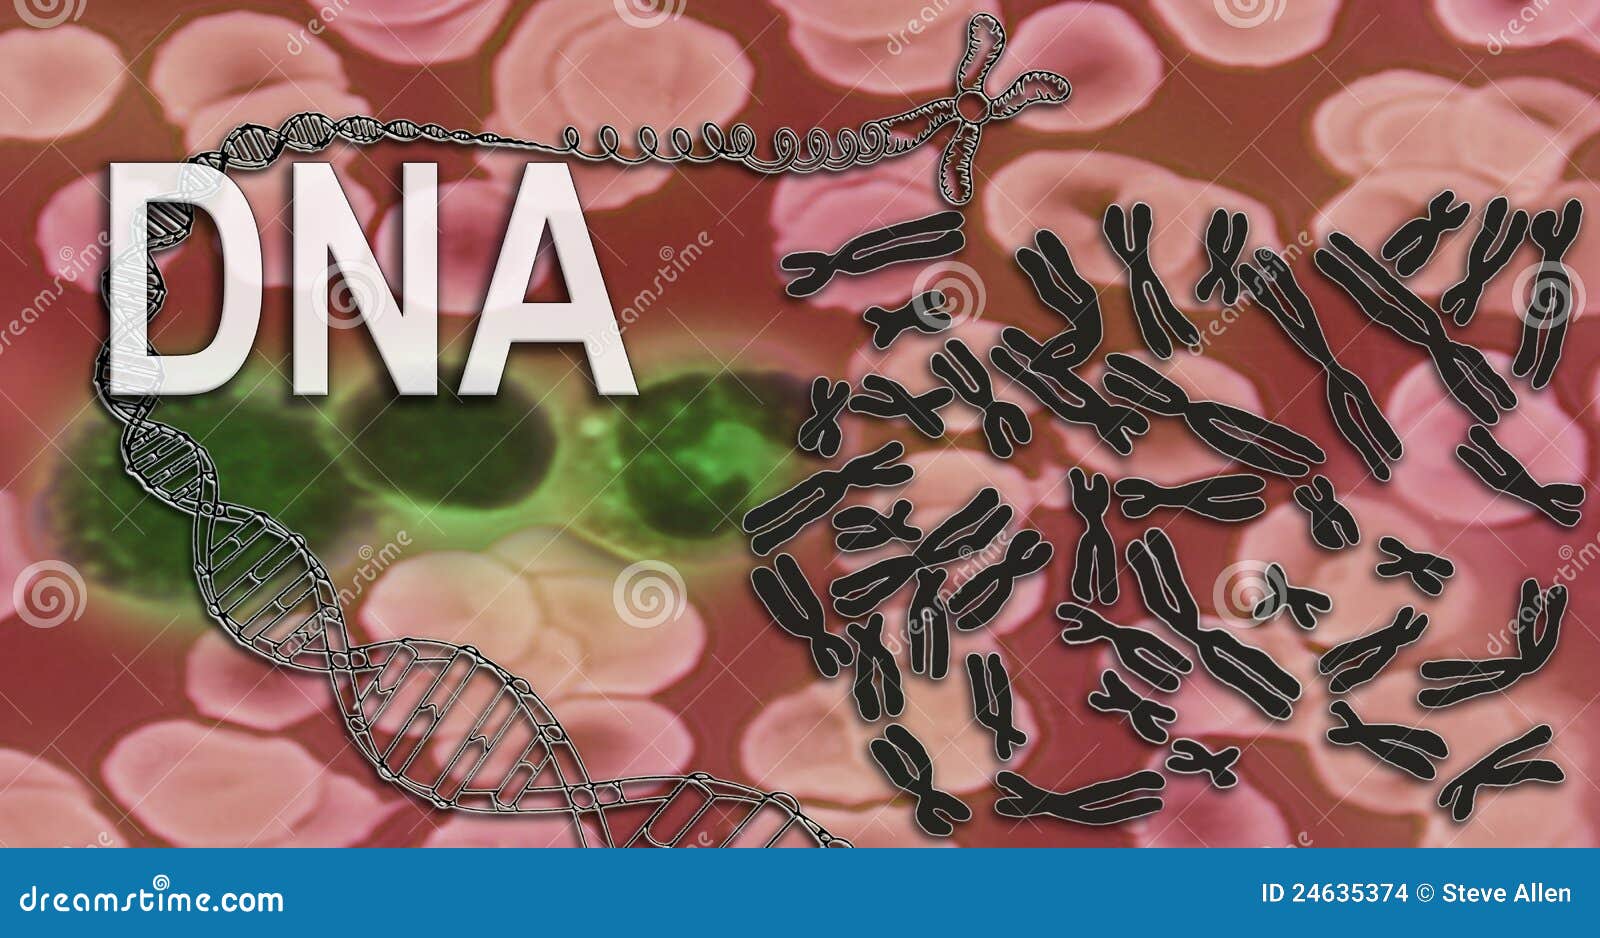 dna - chromosomes - genetic engineering